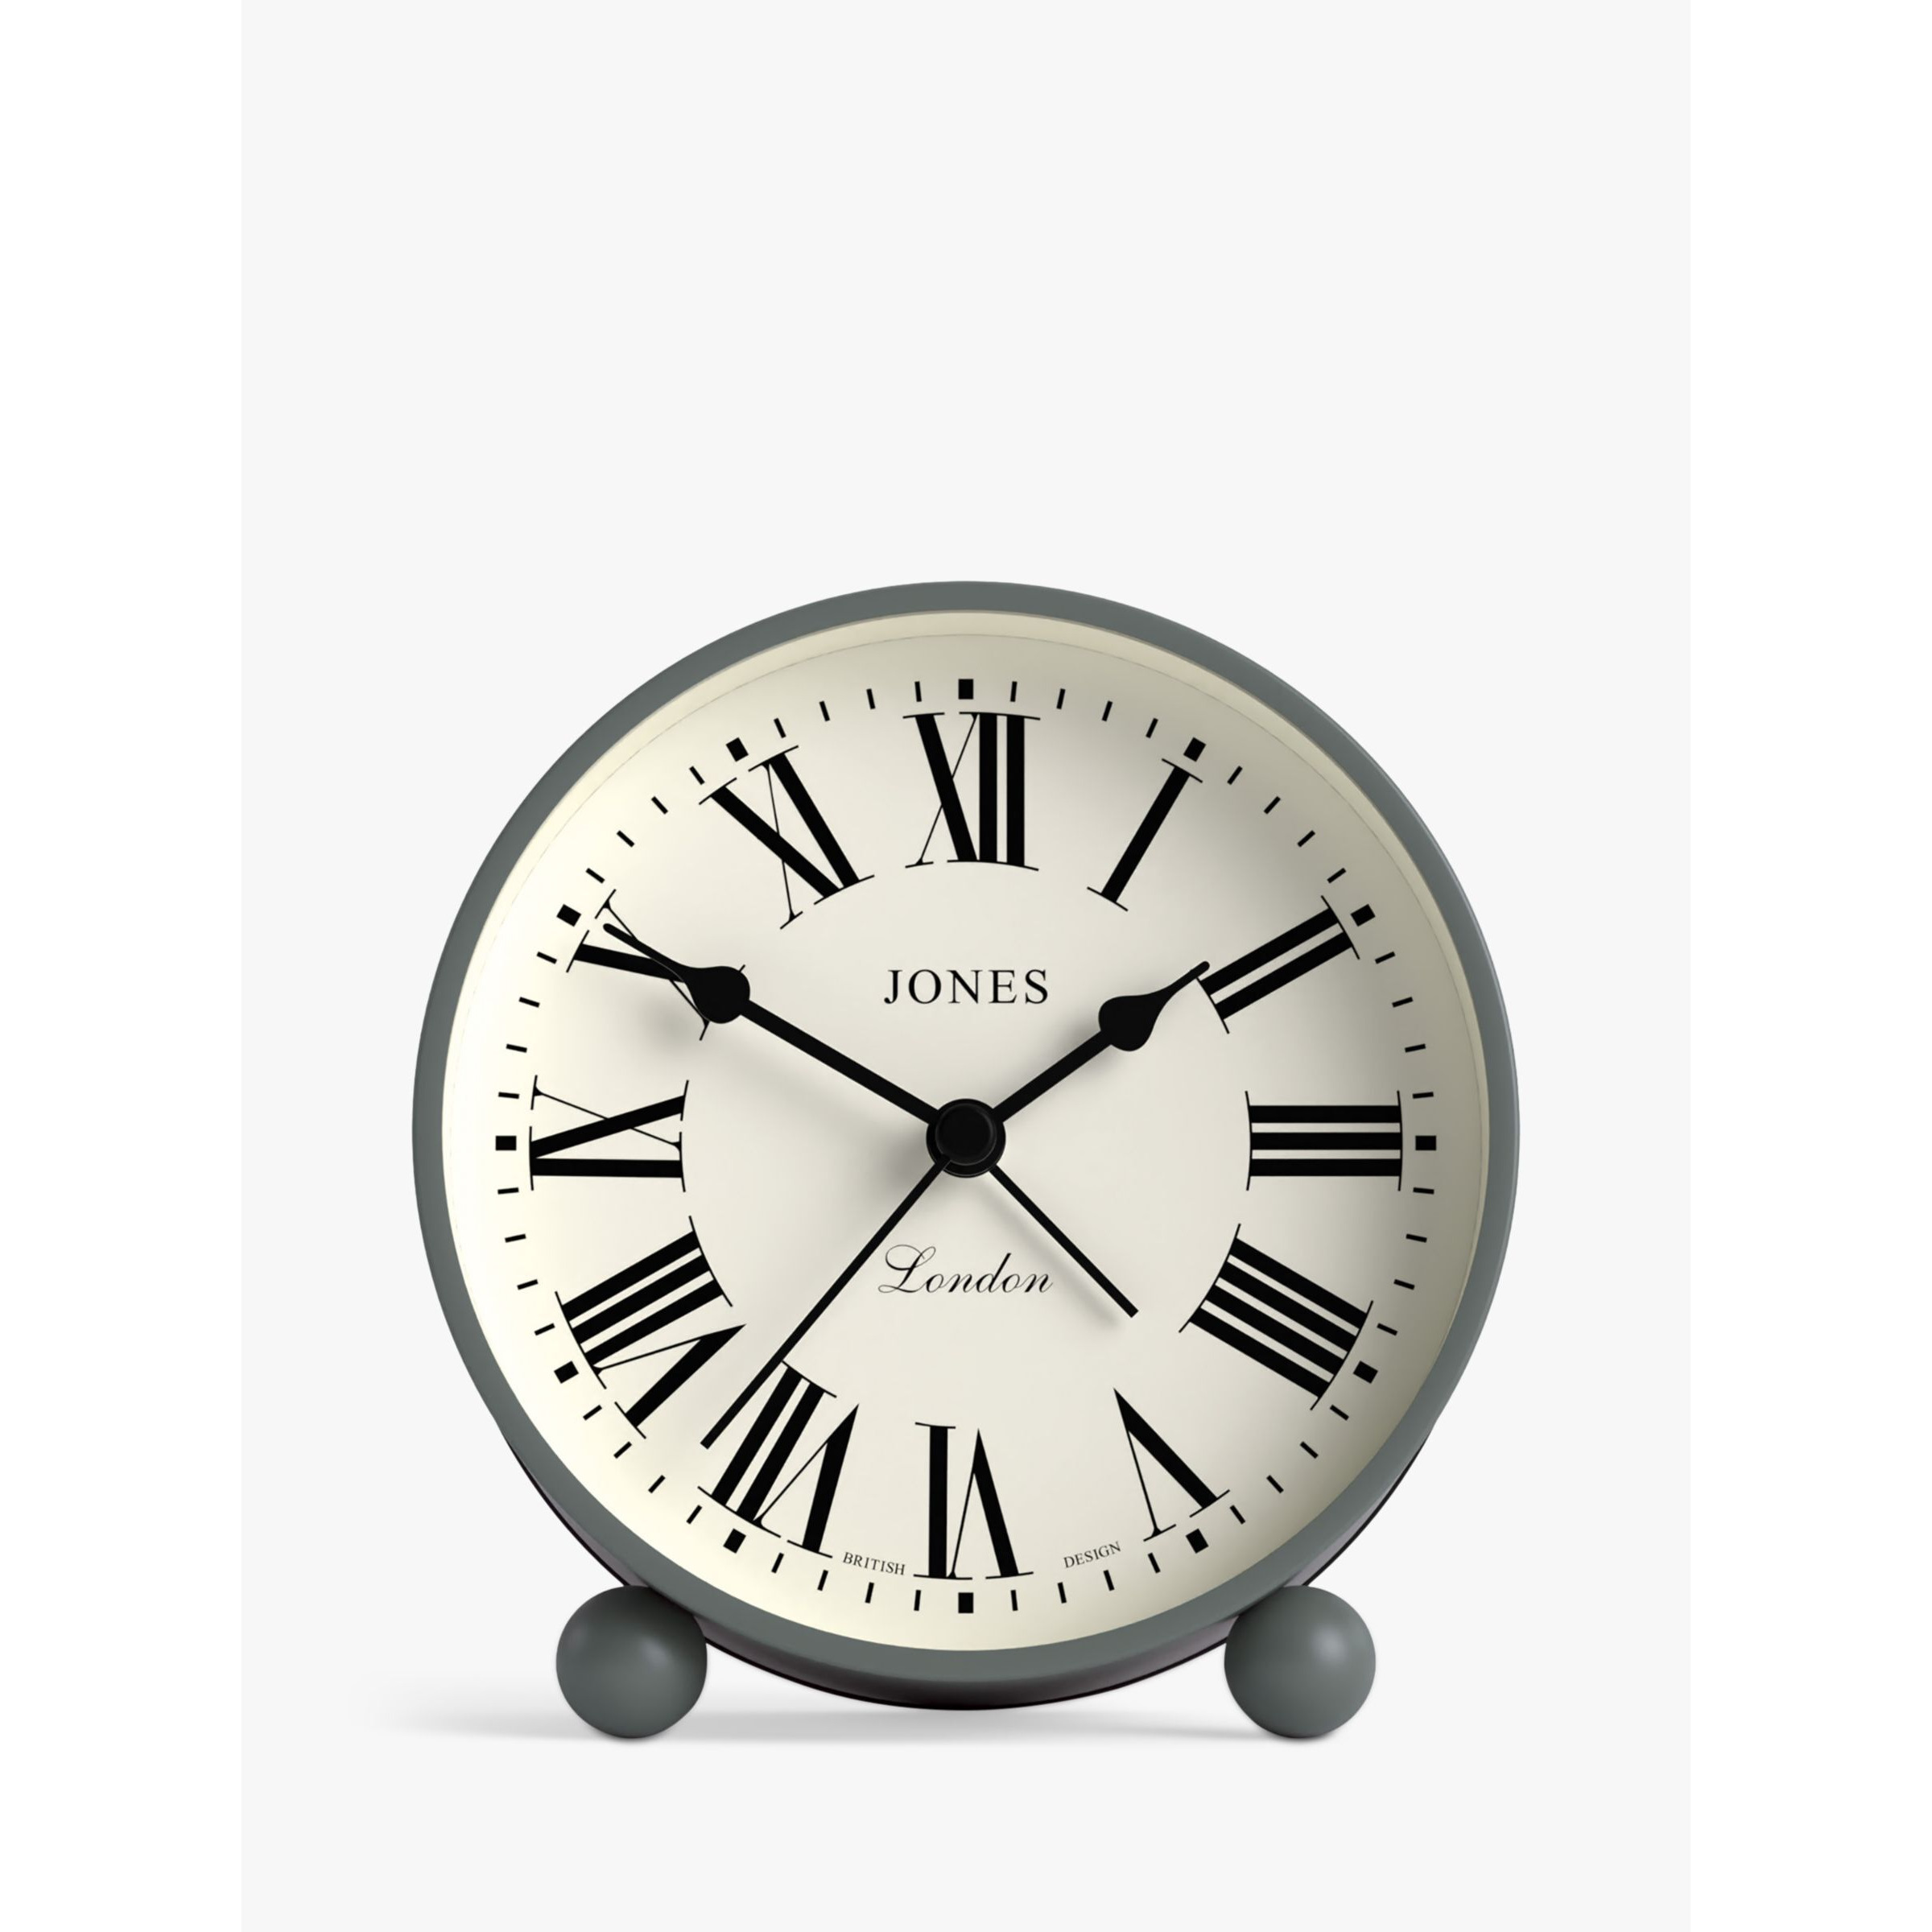 Jones Clocks Marble Roman Numeral Analogue Alarm Clock, Moss Green - image 1